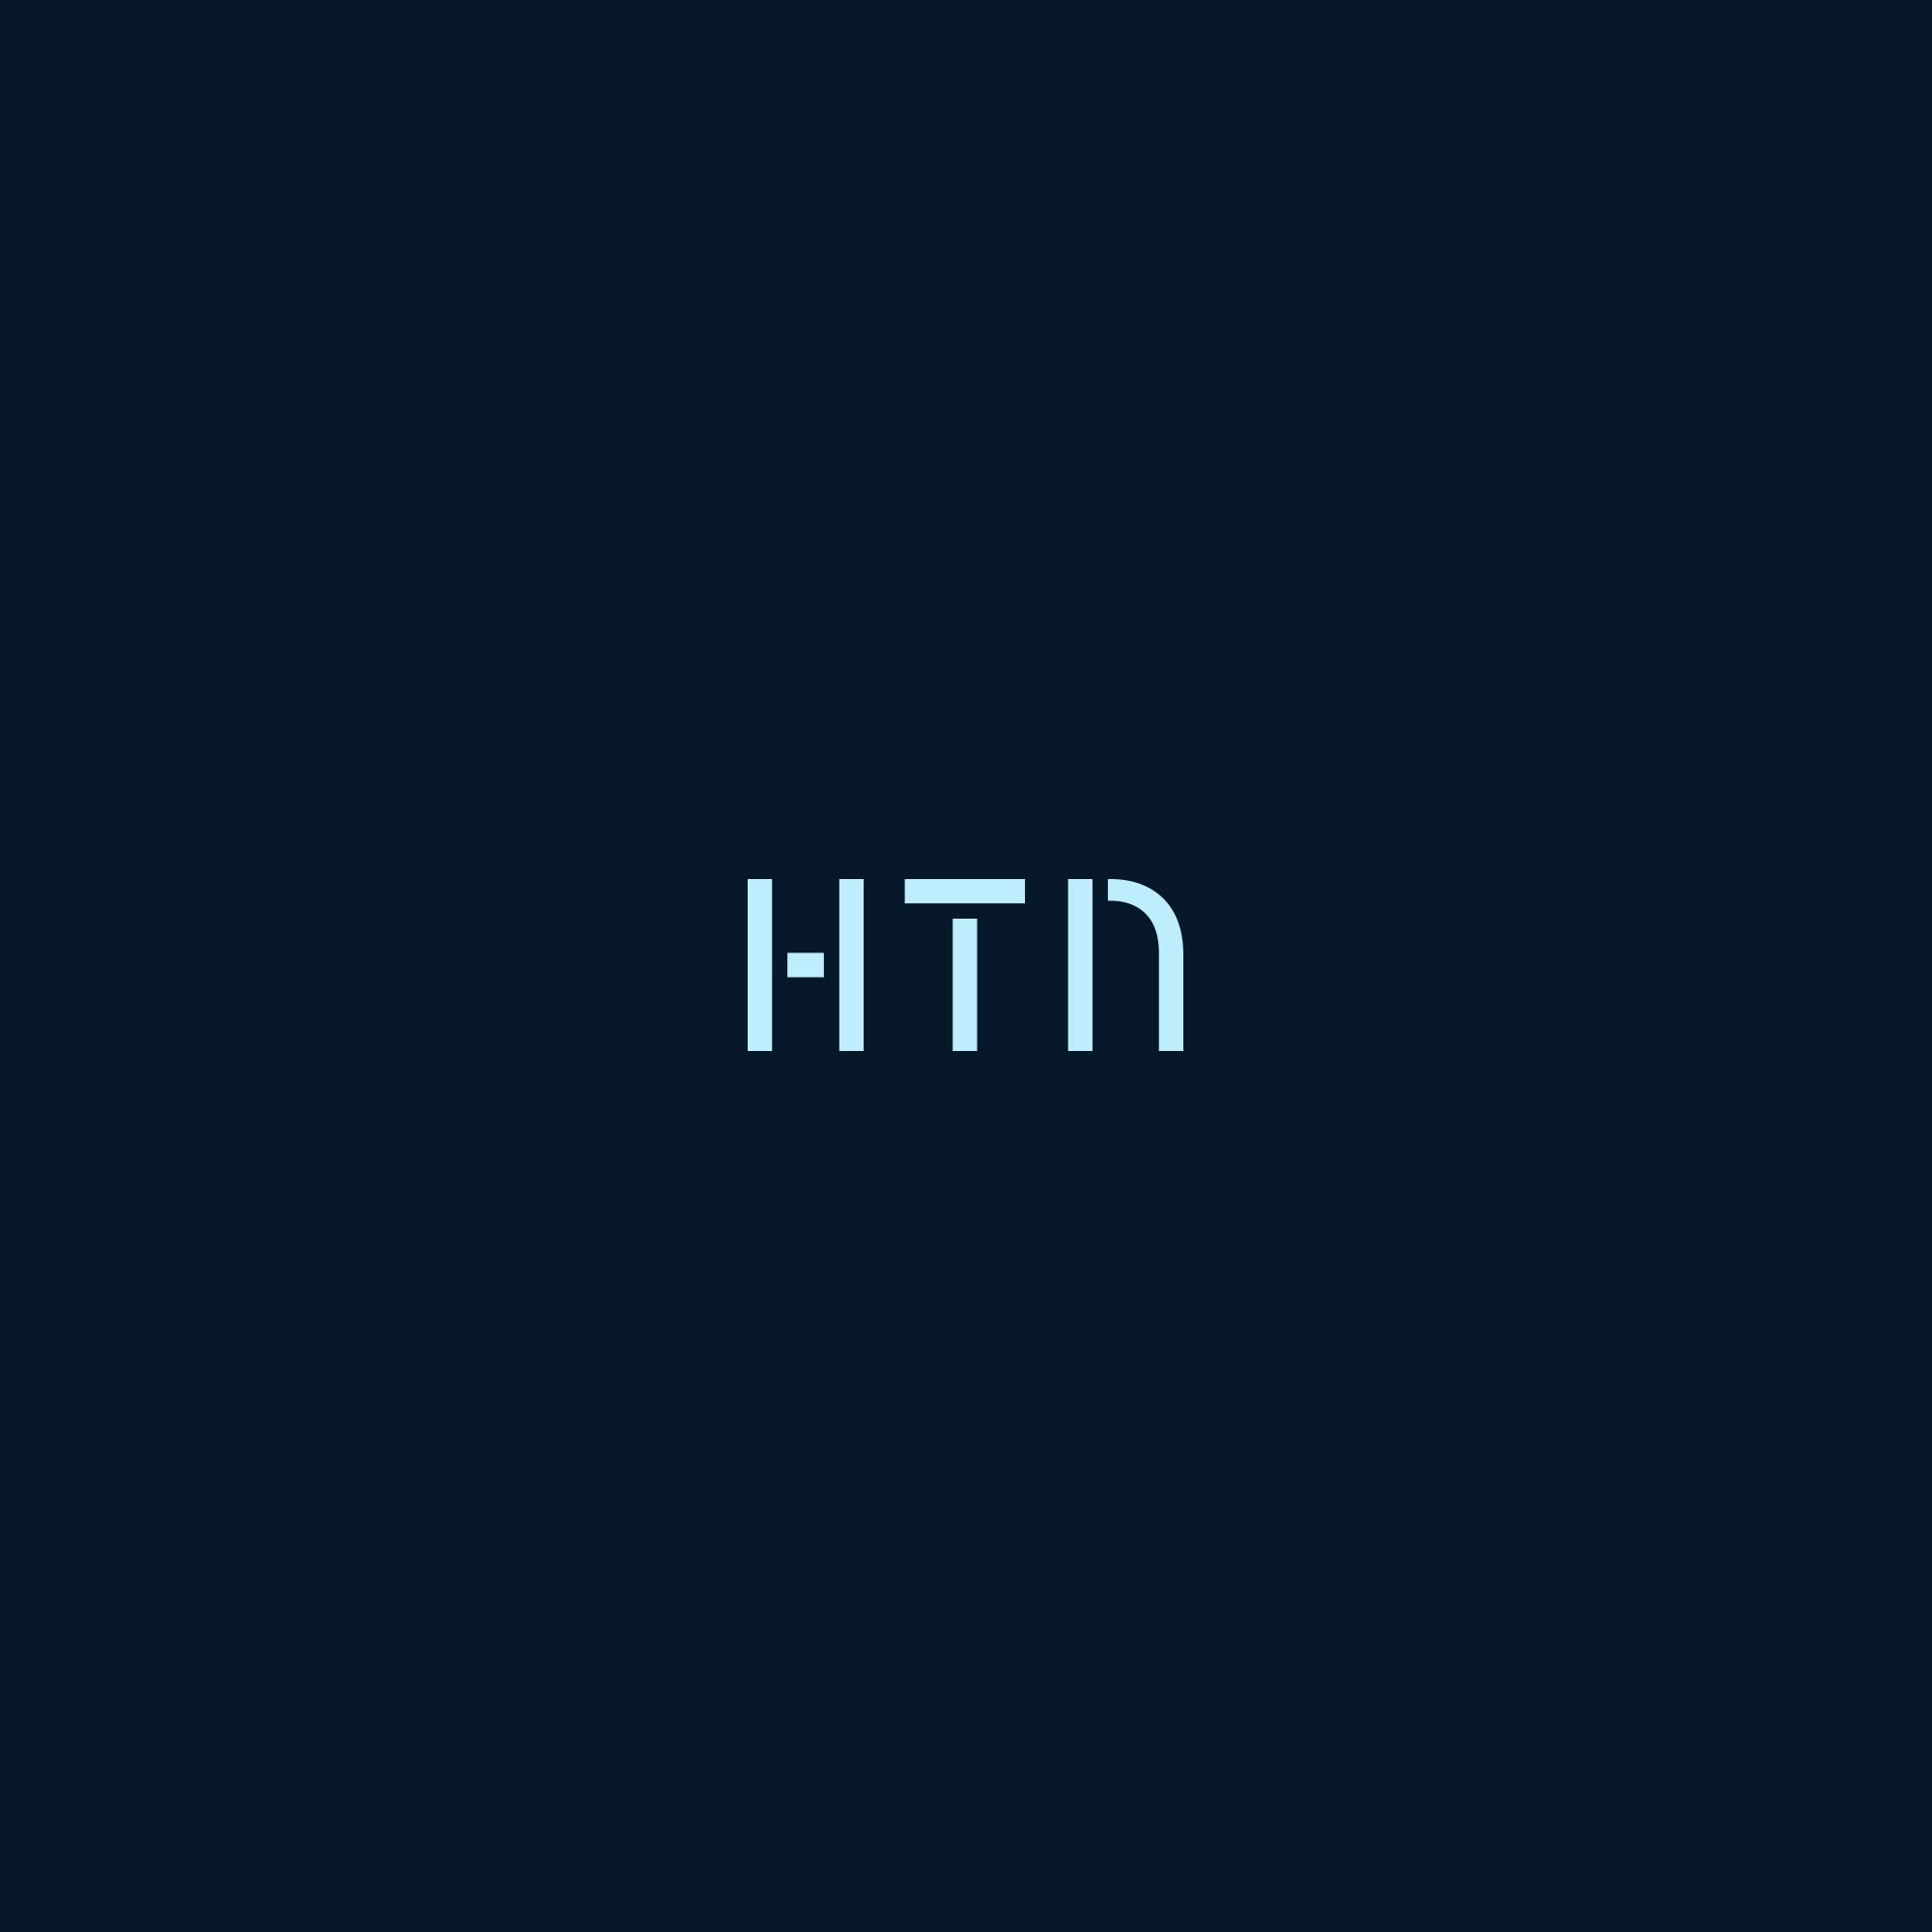 Логотип для НТА - дизайнер Vebjorn